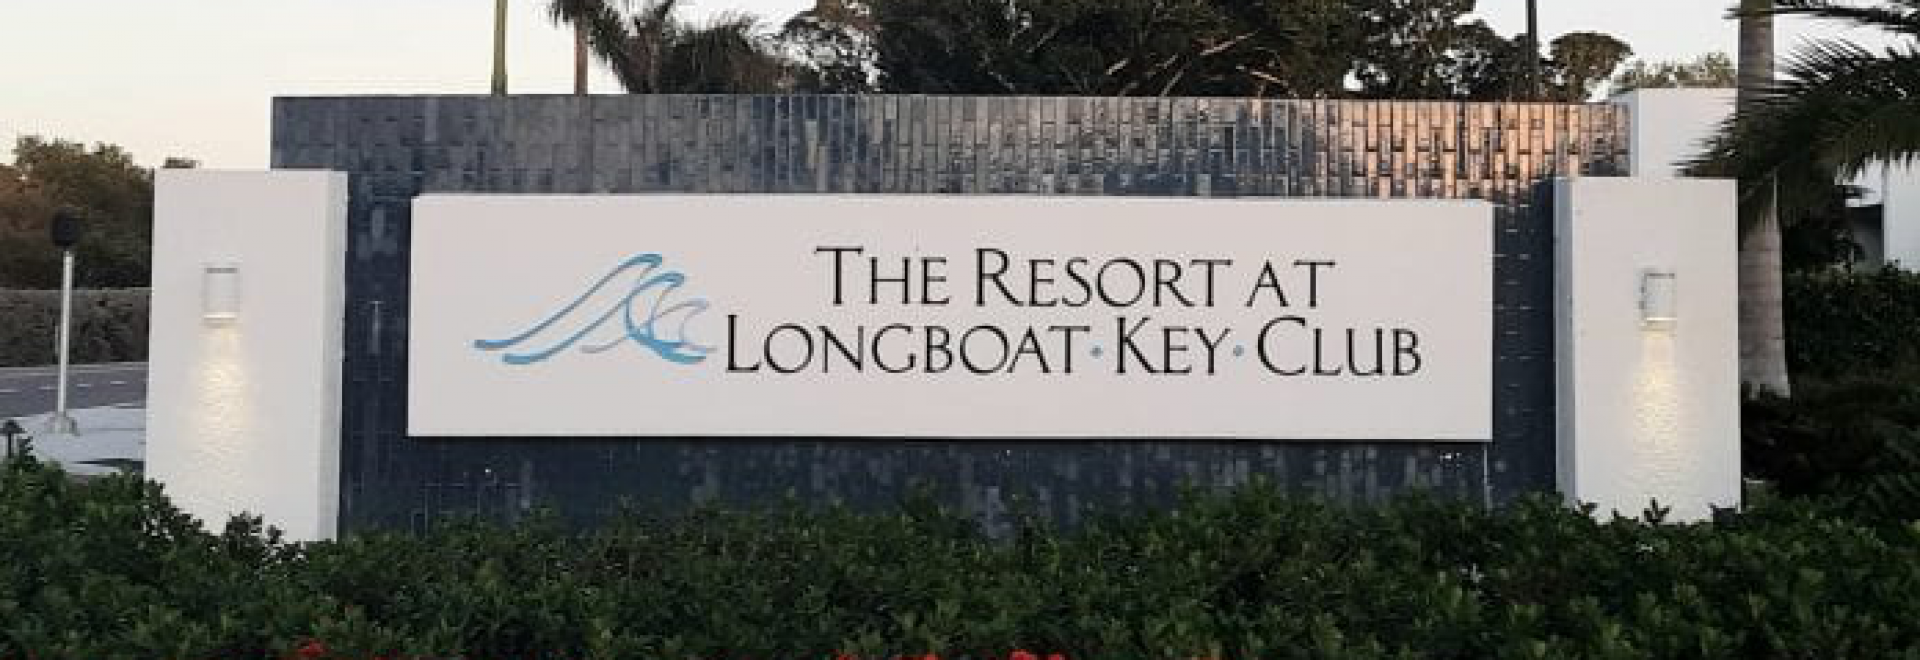 The Resort at Longboat Key Club, Florida - Book. Travel. Play.